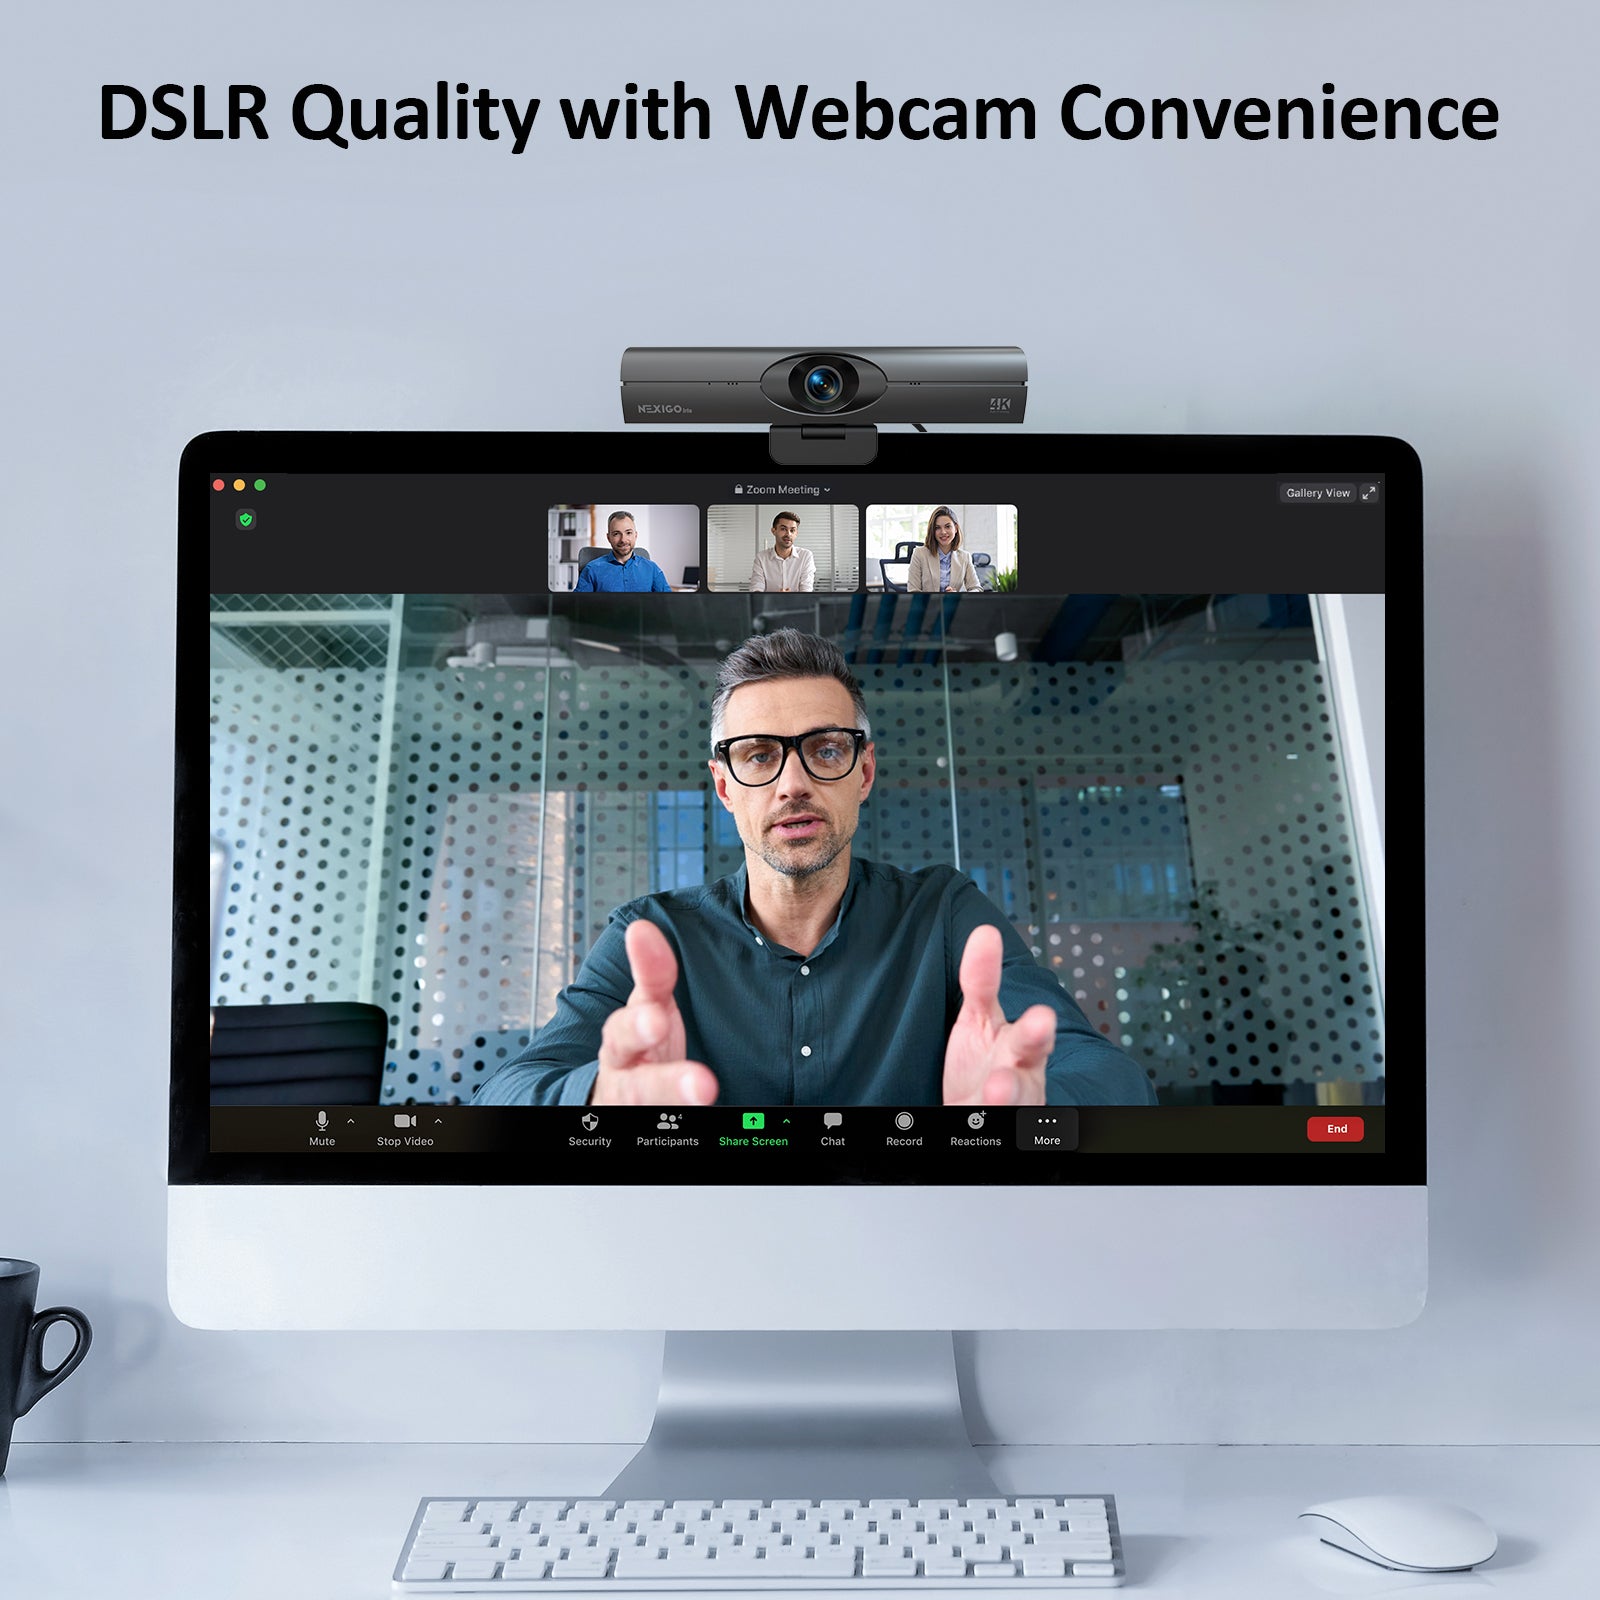 Webcam delivers DSLR-quality in conference videos.